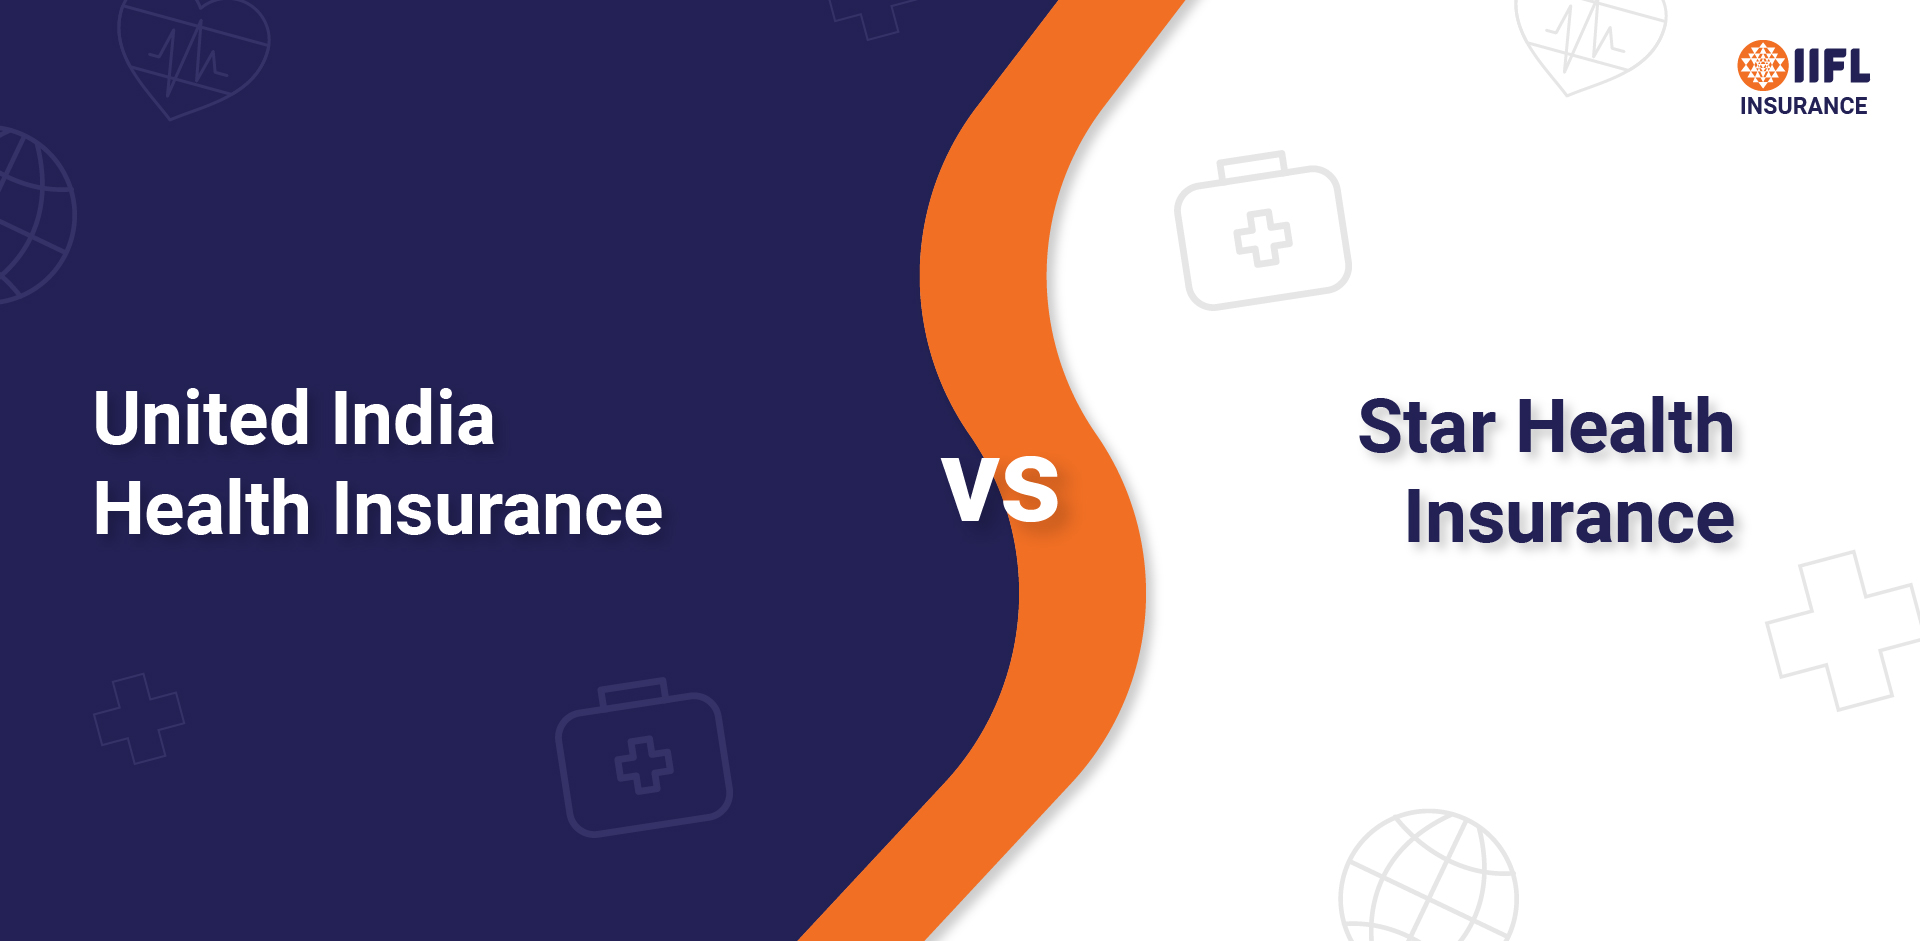 United India Health Insurance vs Star Health Health Insurance